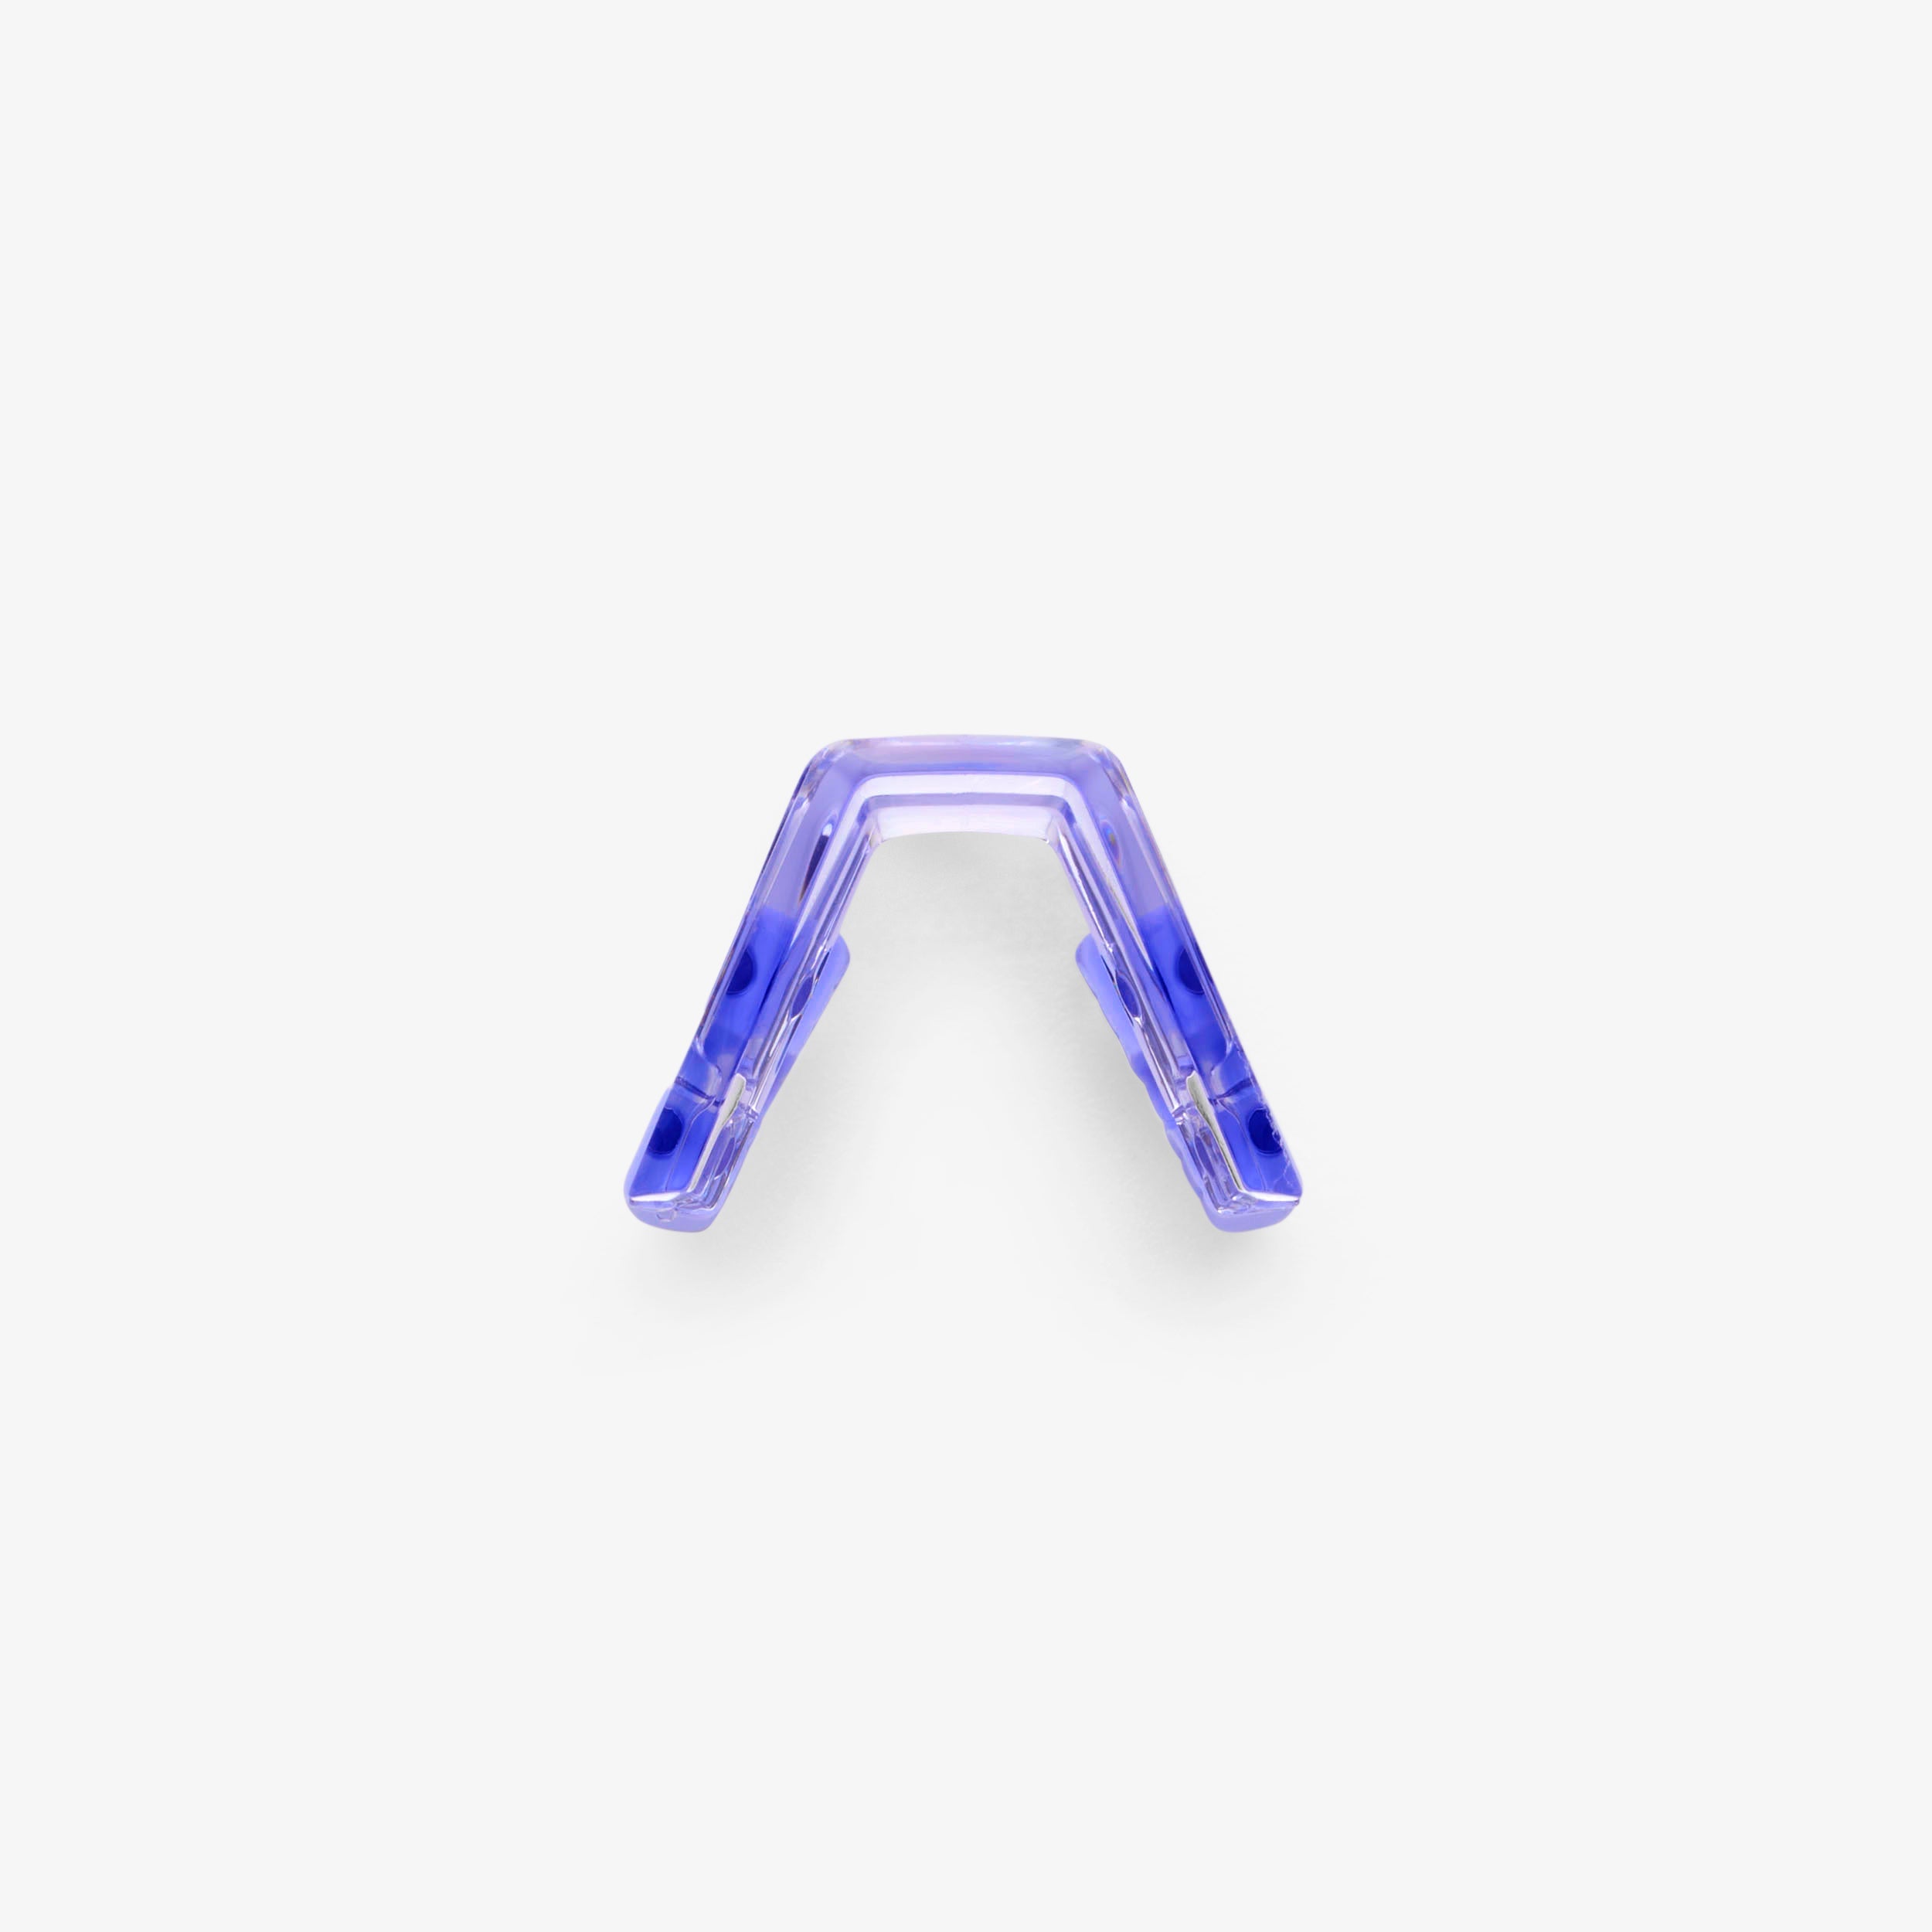 SPEEDCRAFT XS Nose Bridge Kit - Short - Polished Translucent Lavender